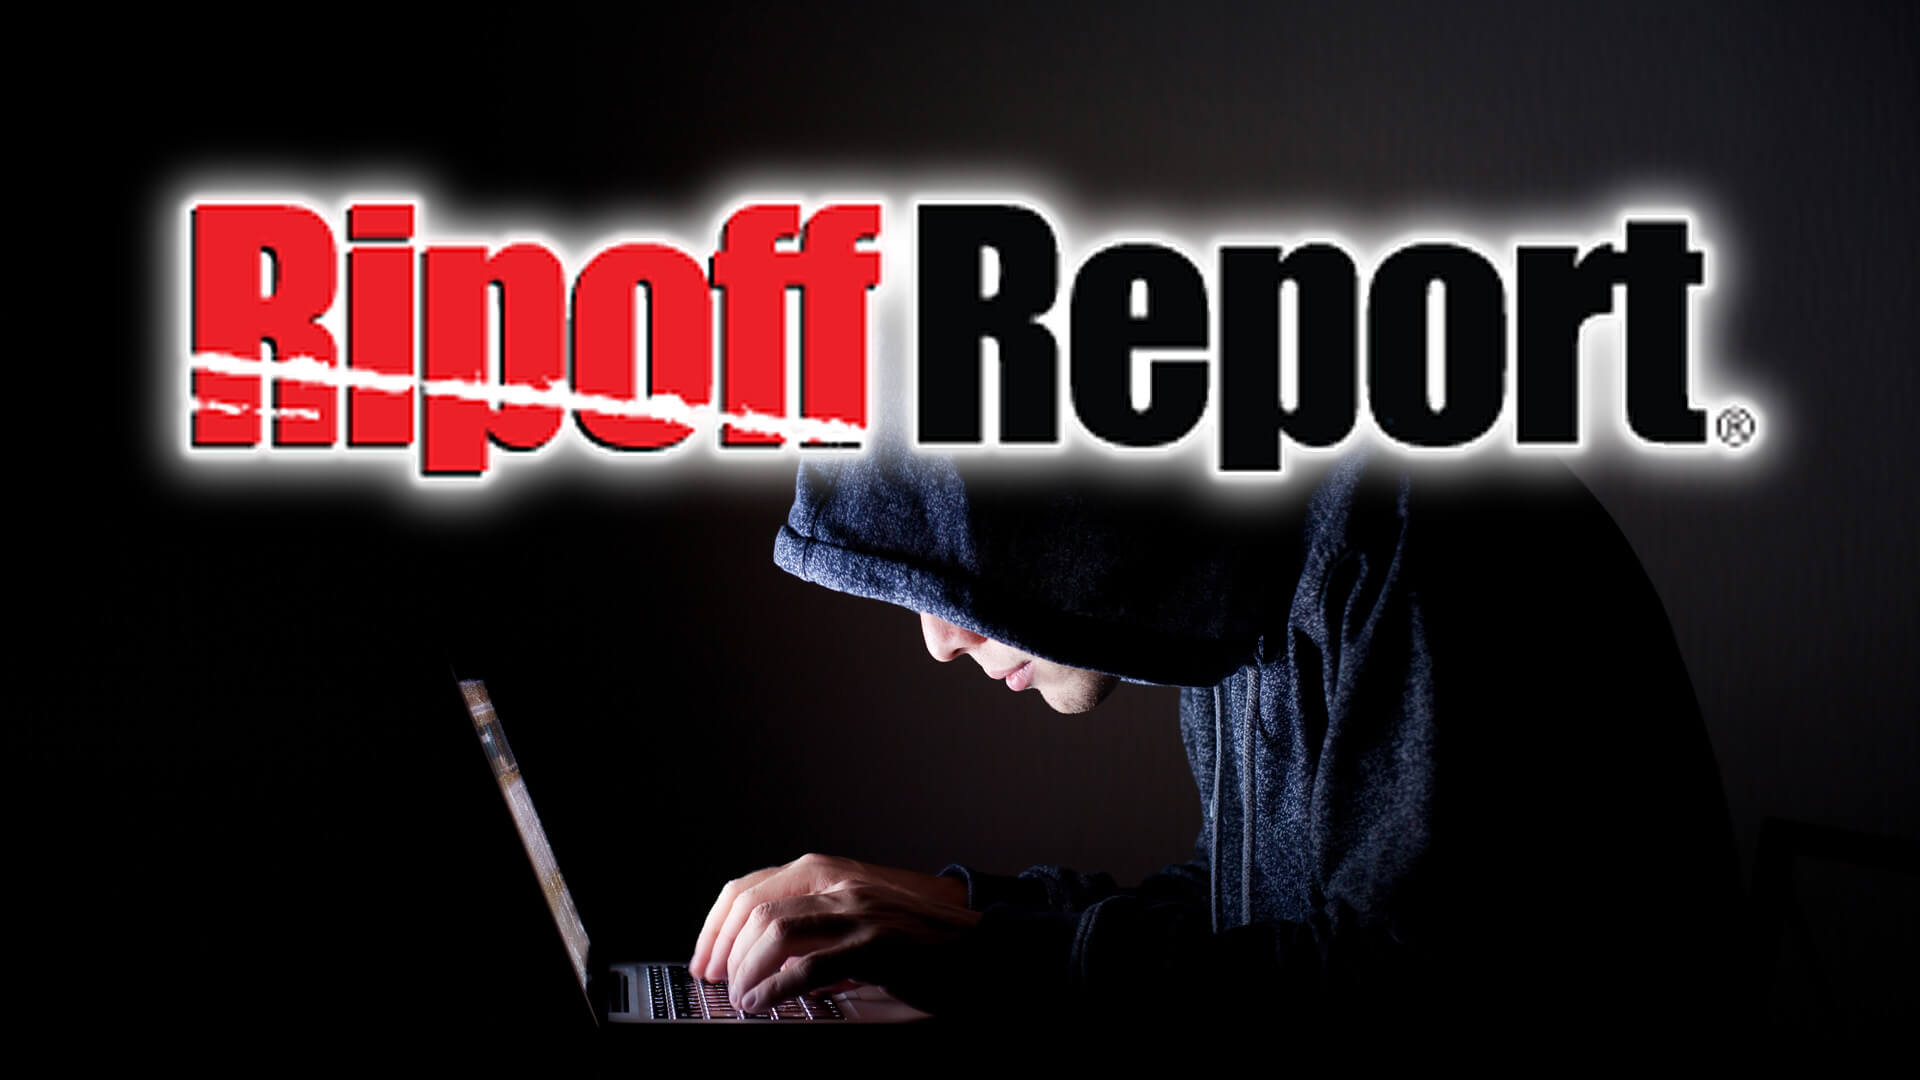 Ripoff Report Defamation Removals